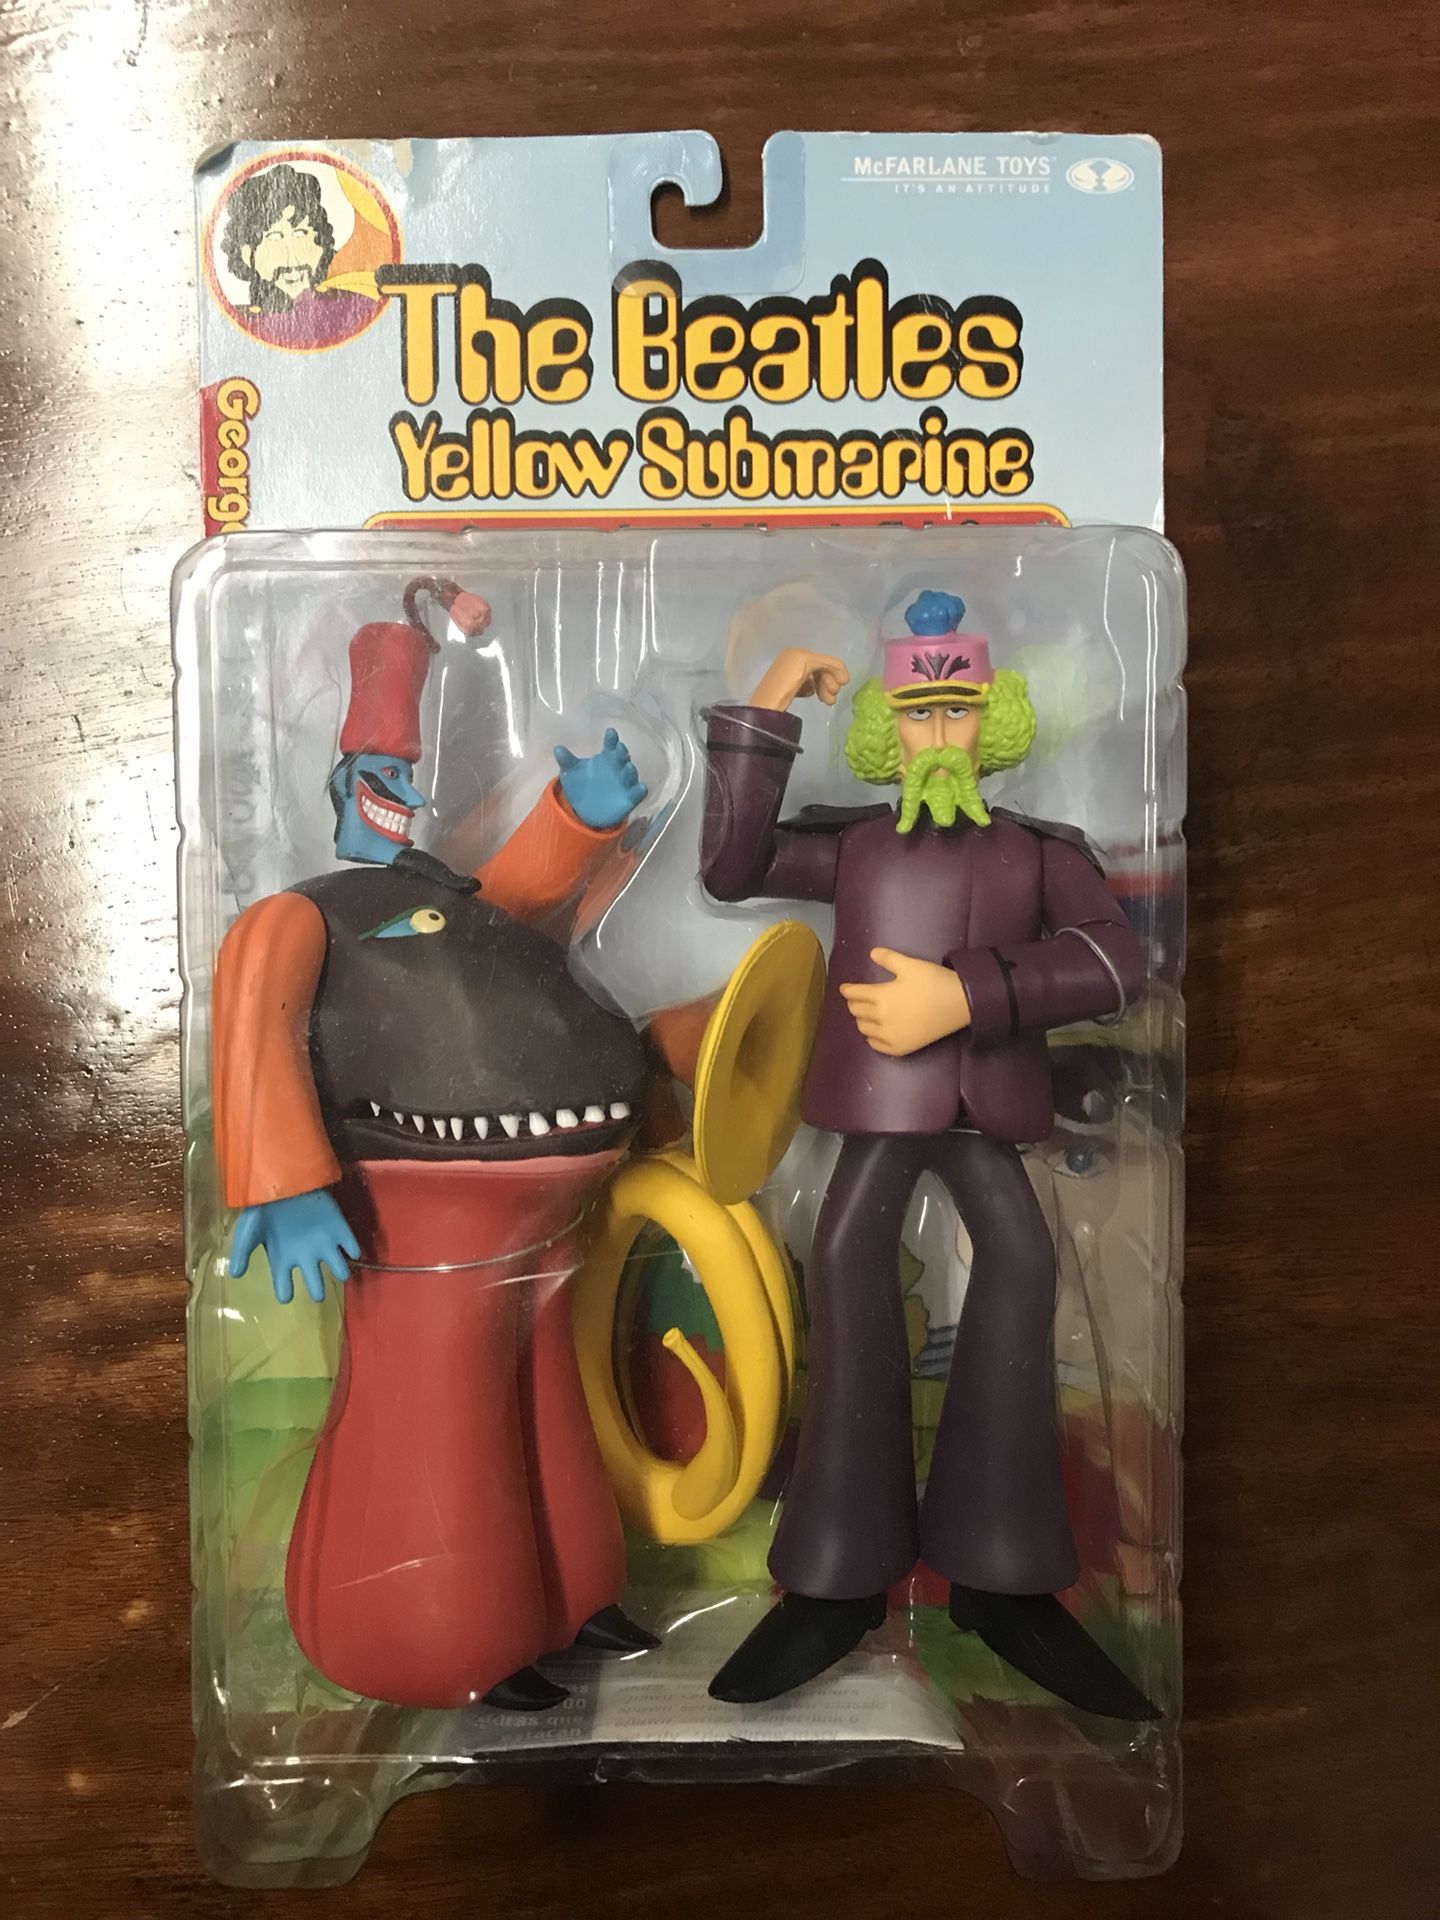 The Beatles yellow submarine